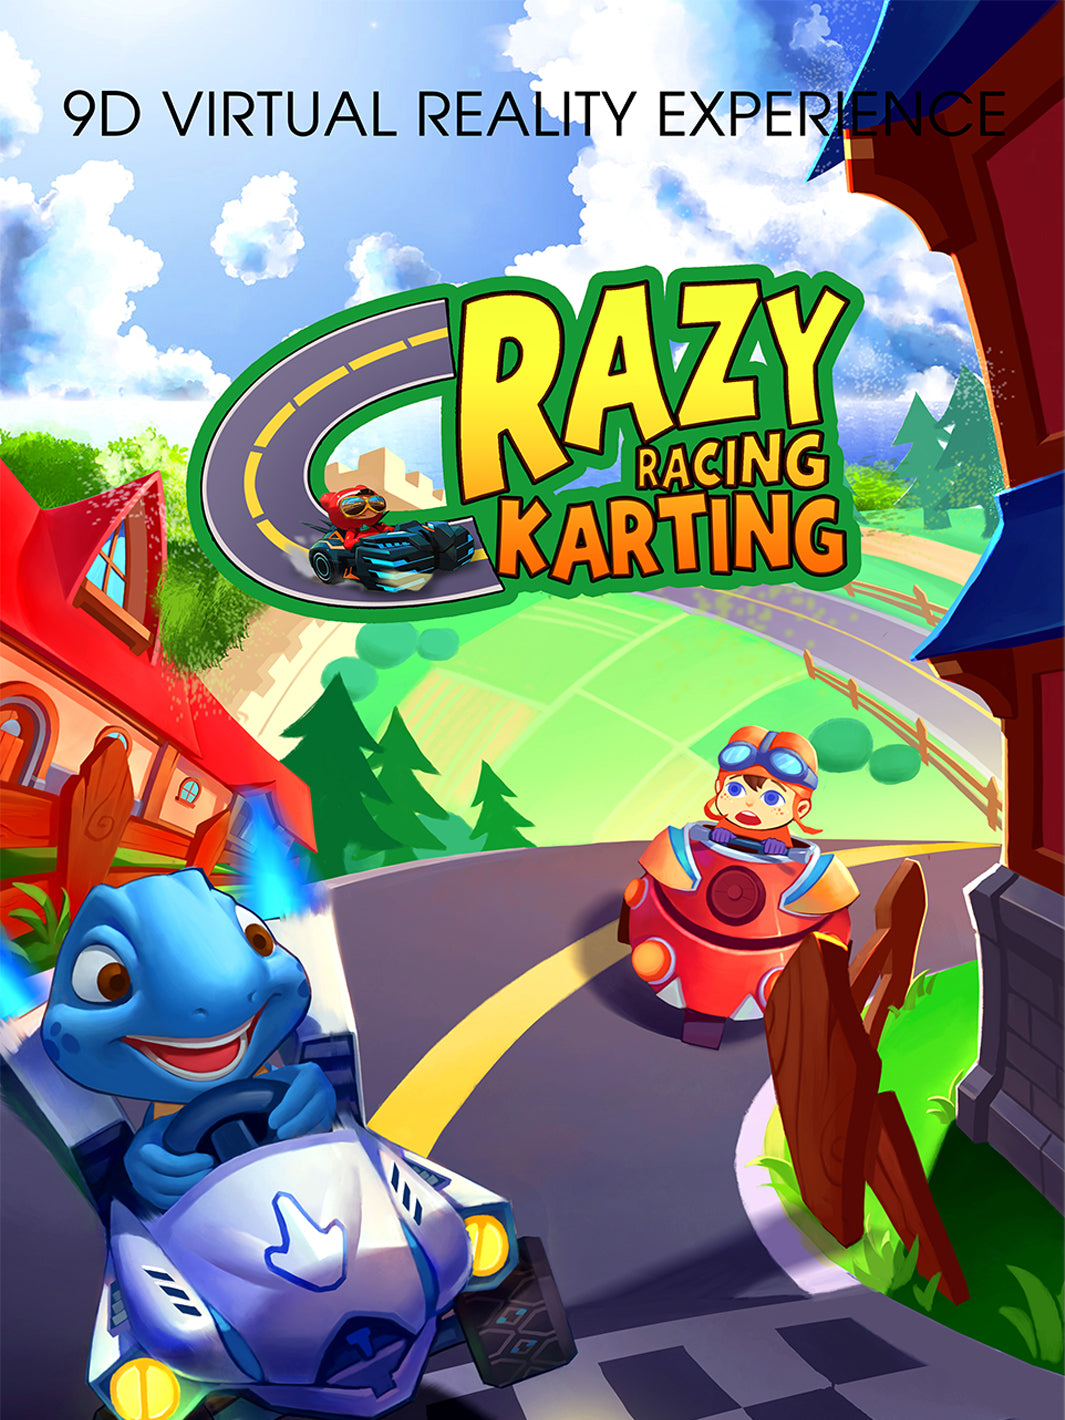 Razy racing kart - ShallxR LBVR Solution